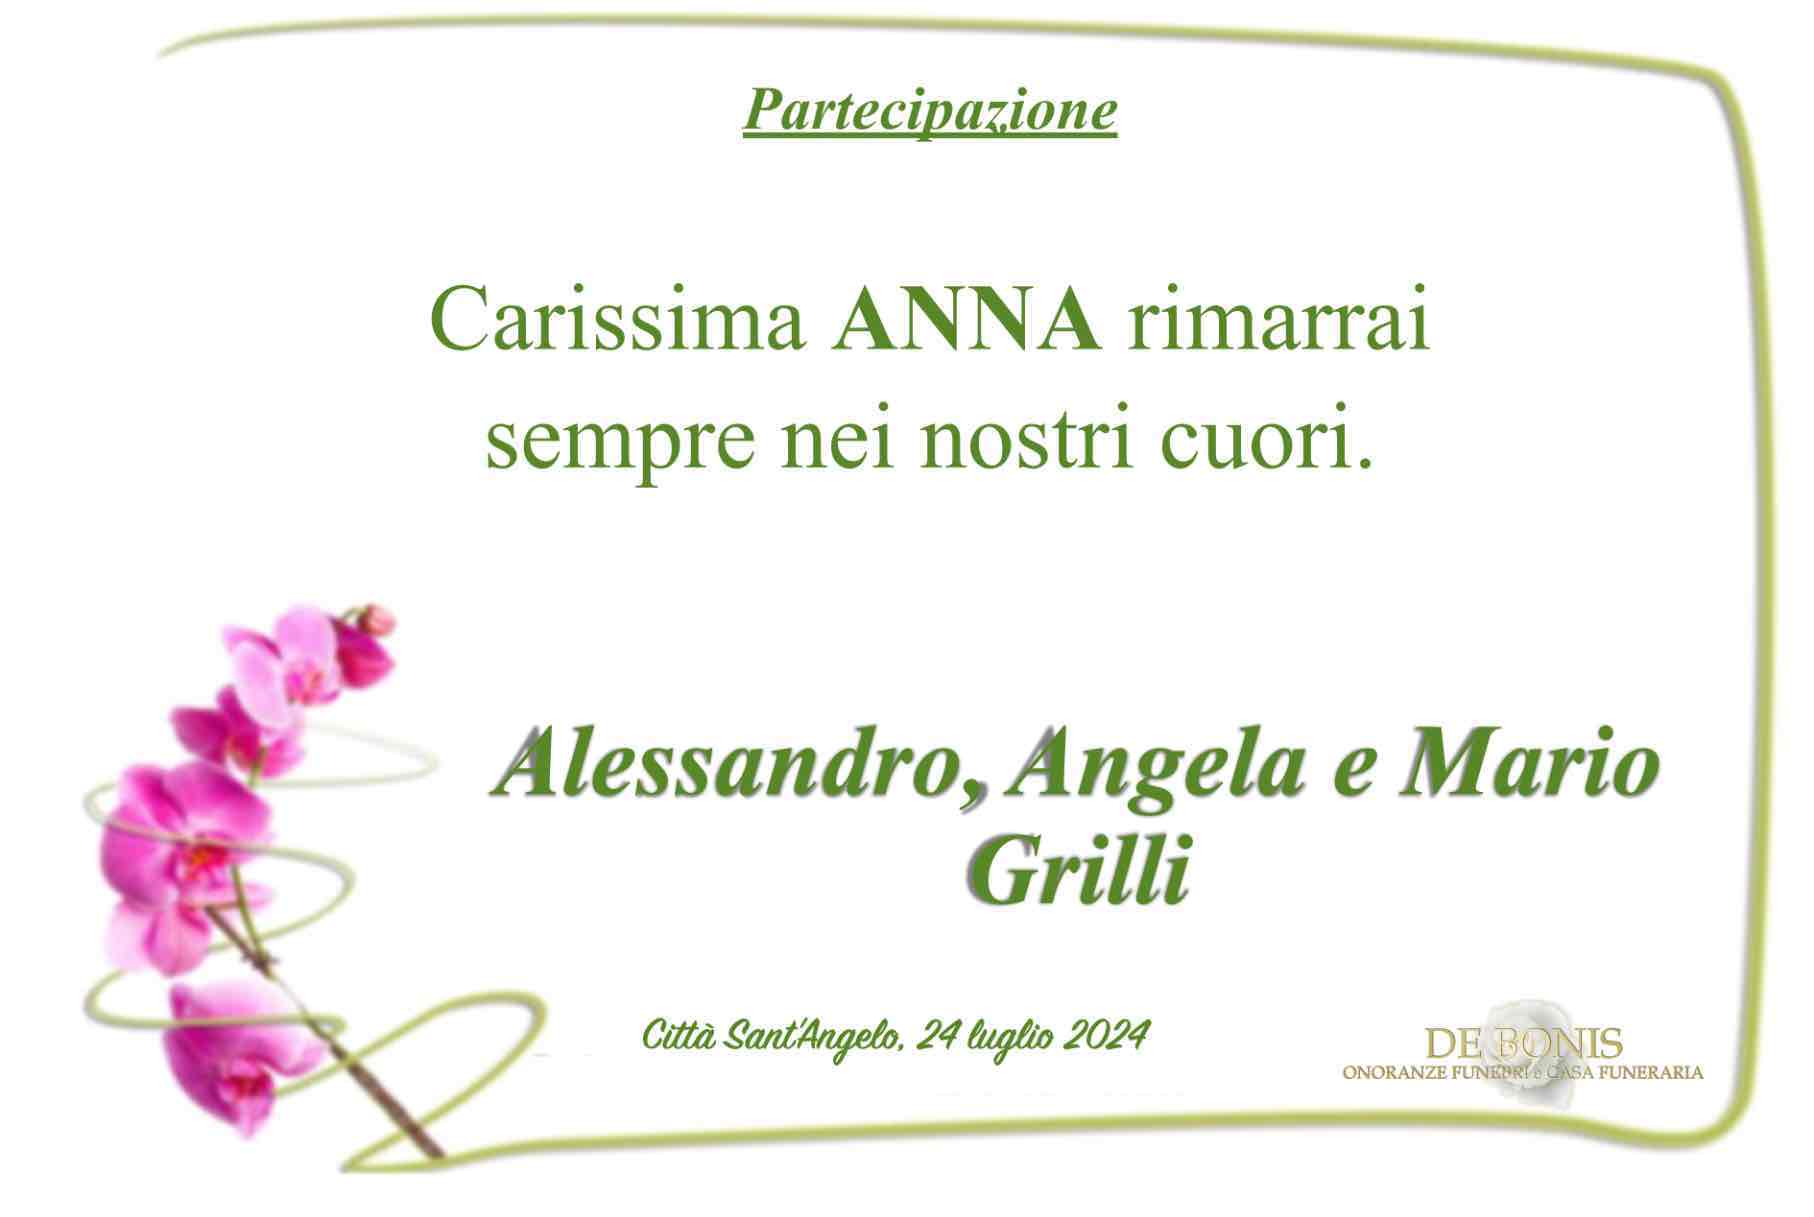 Angelucci Anna